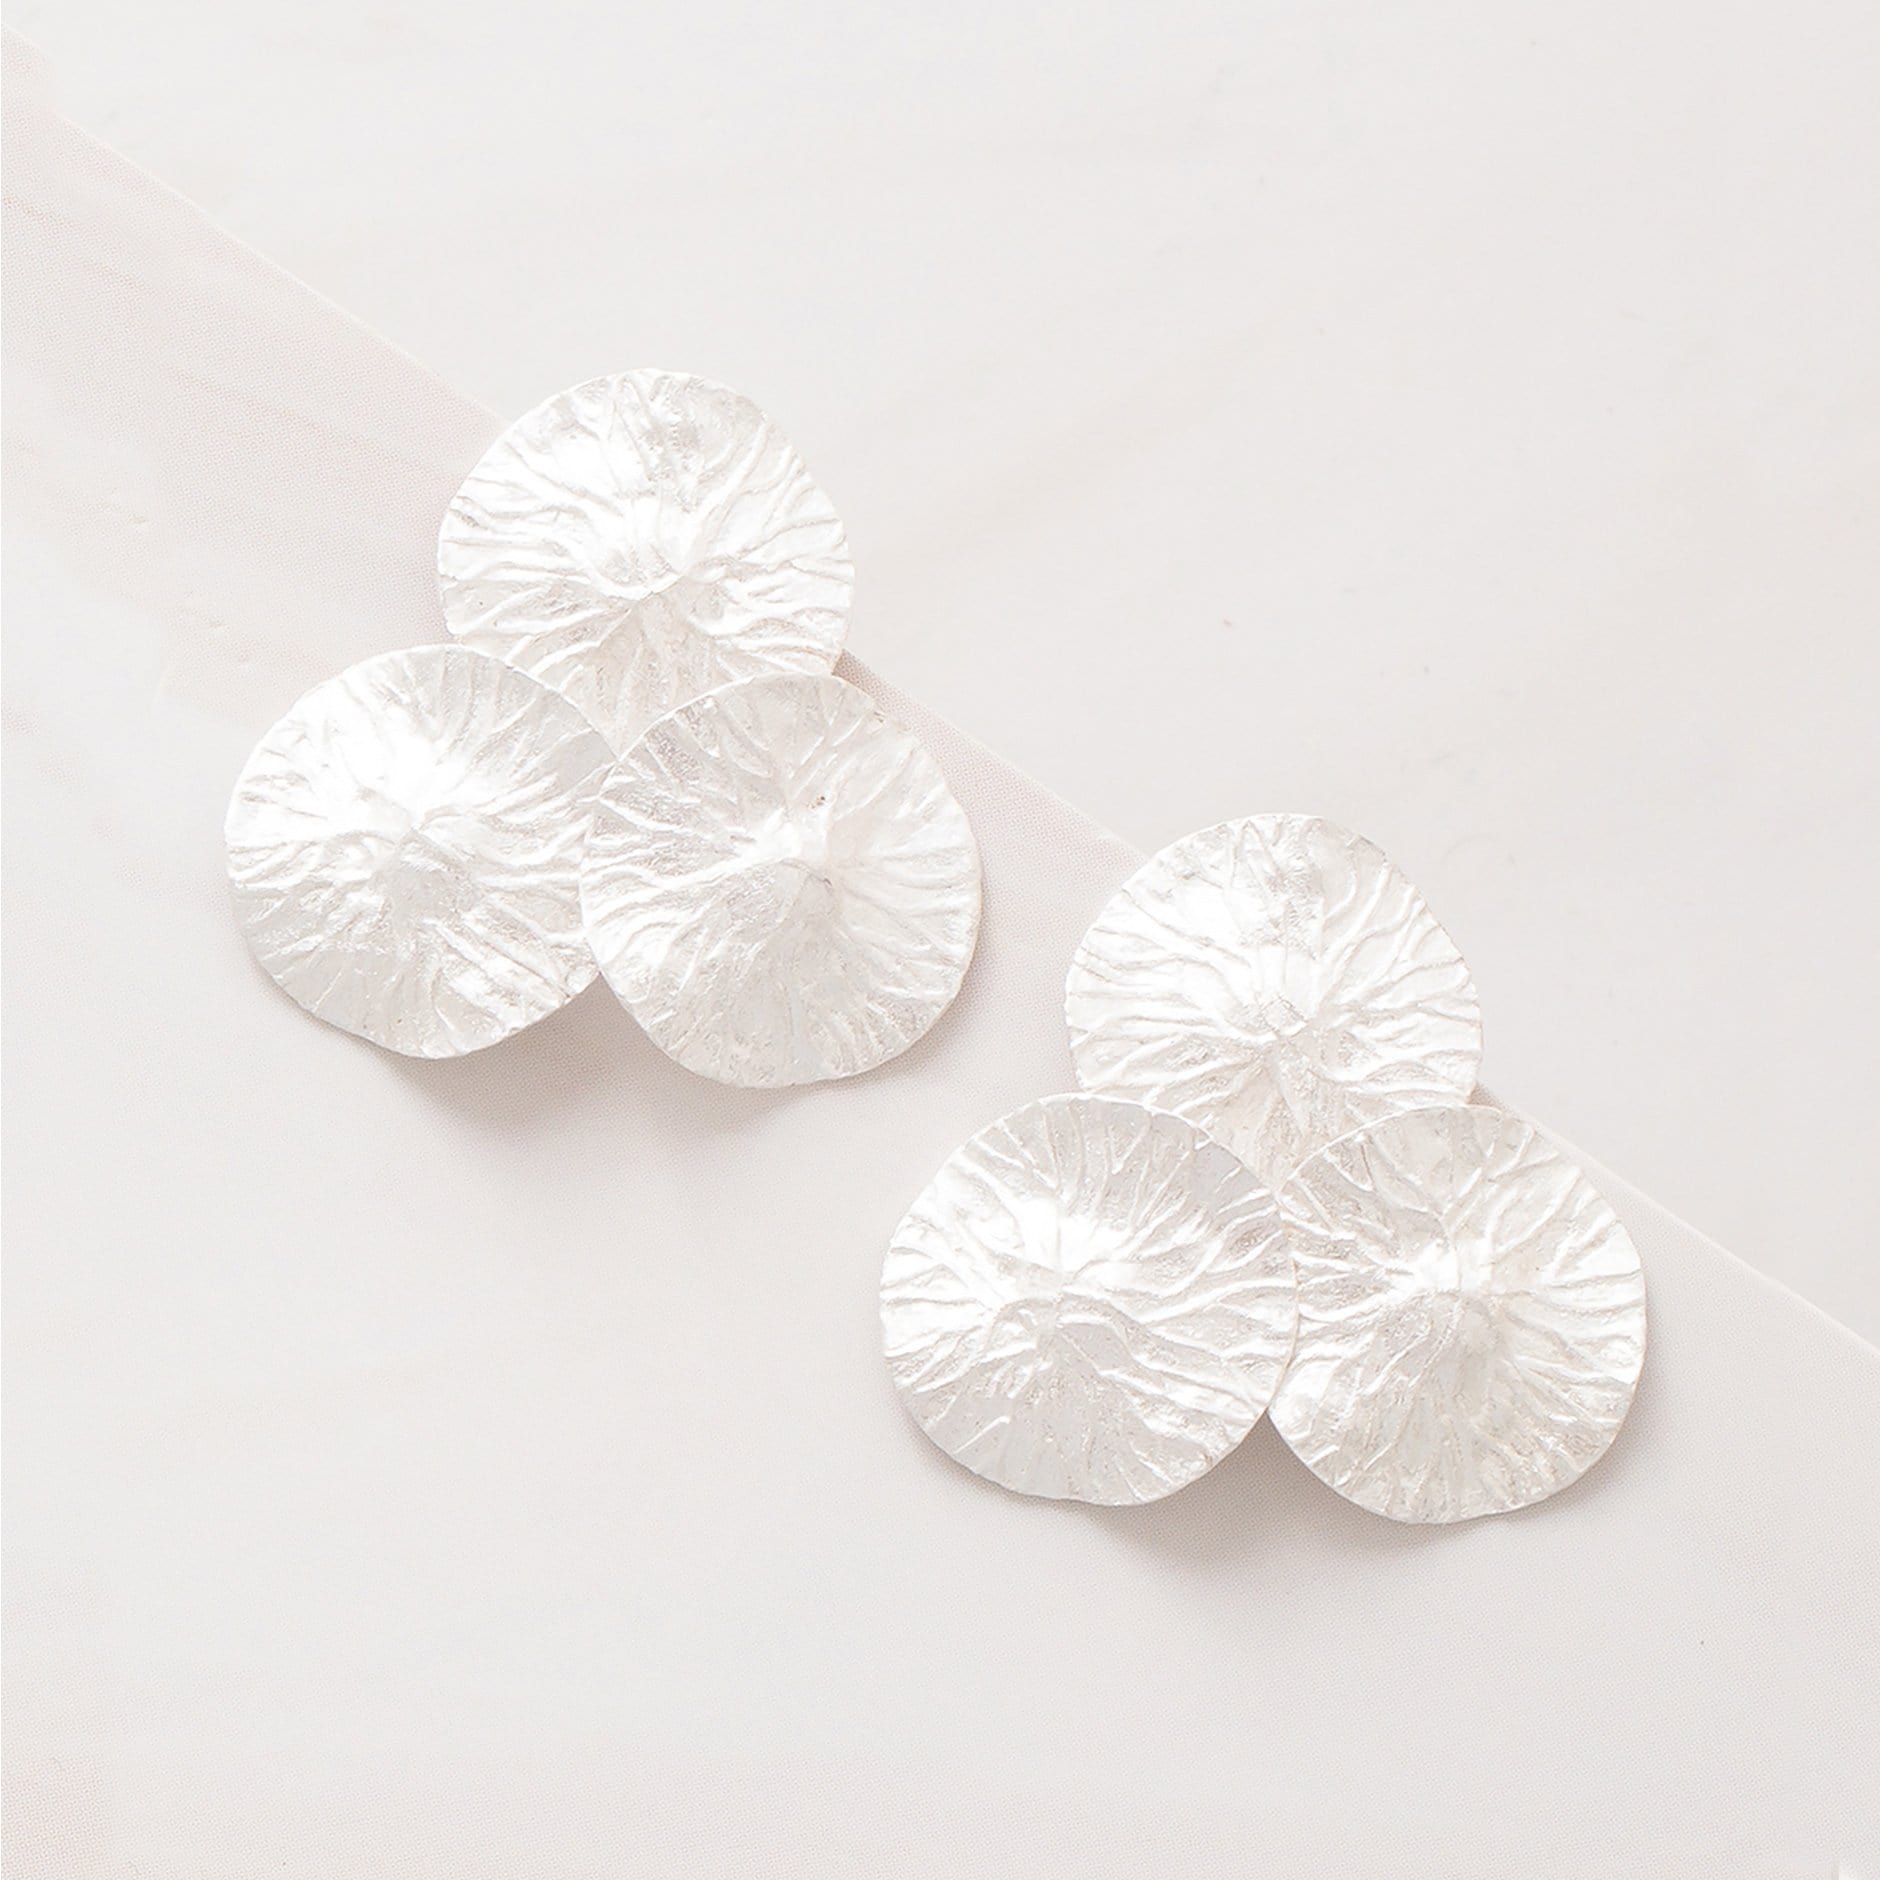 Emblem Jewelry Earrings Silver Tone Dancing Lily Pad Statement Earrings